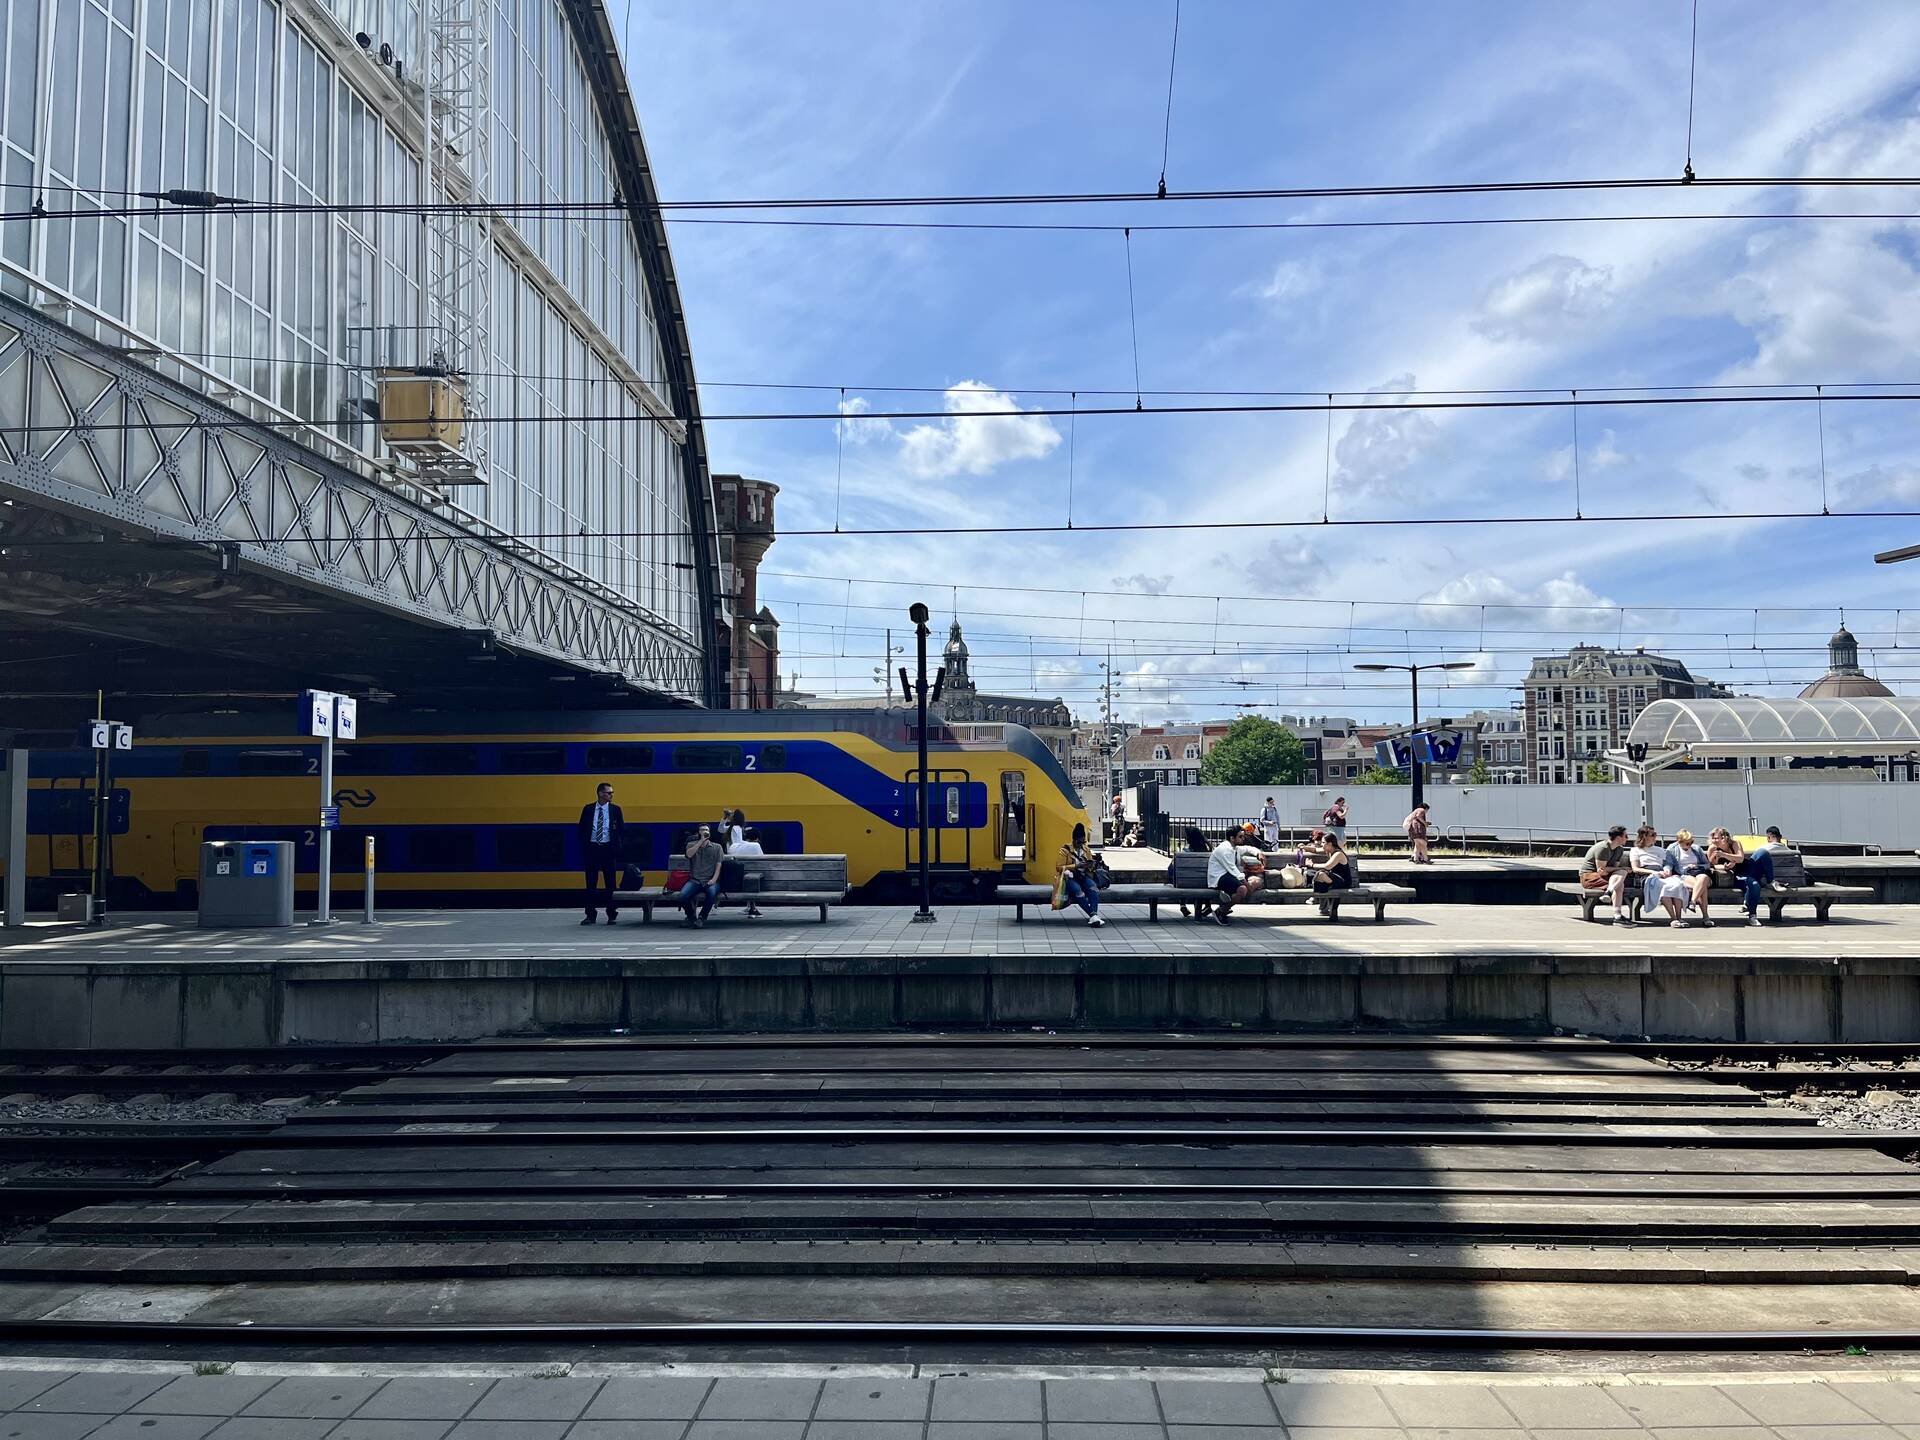 Amsterdam Central站，荷铁的车和内地一样都是统一涂装